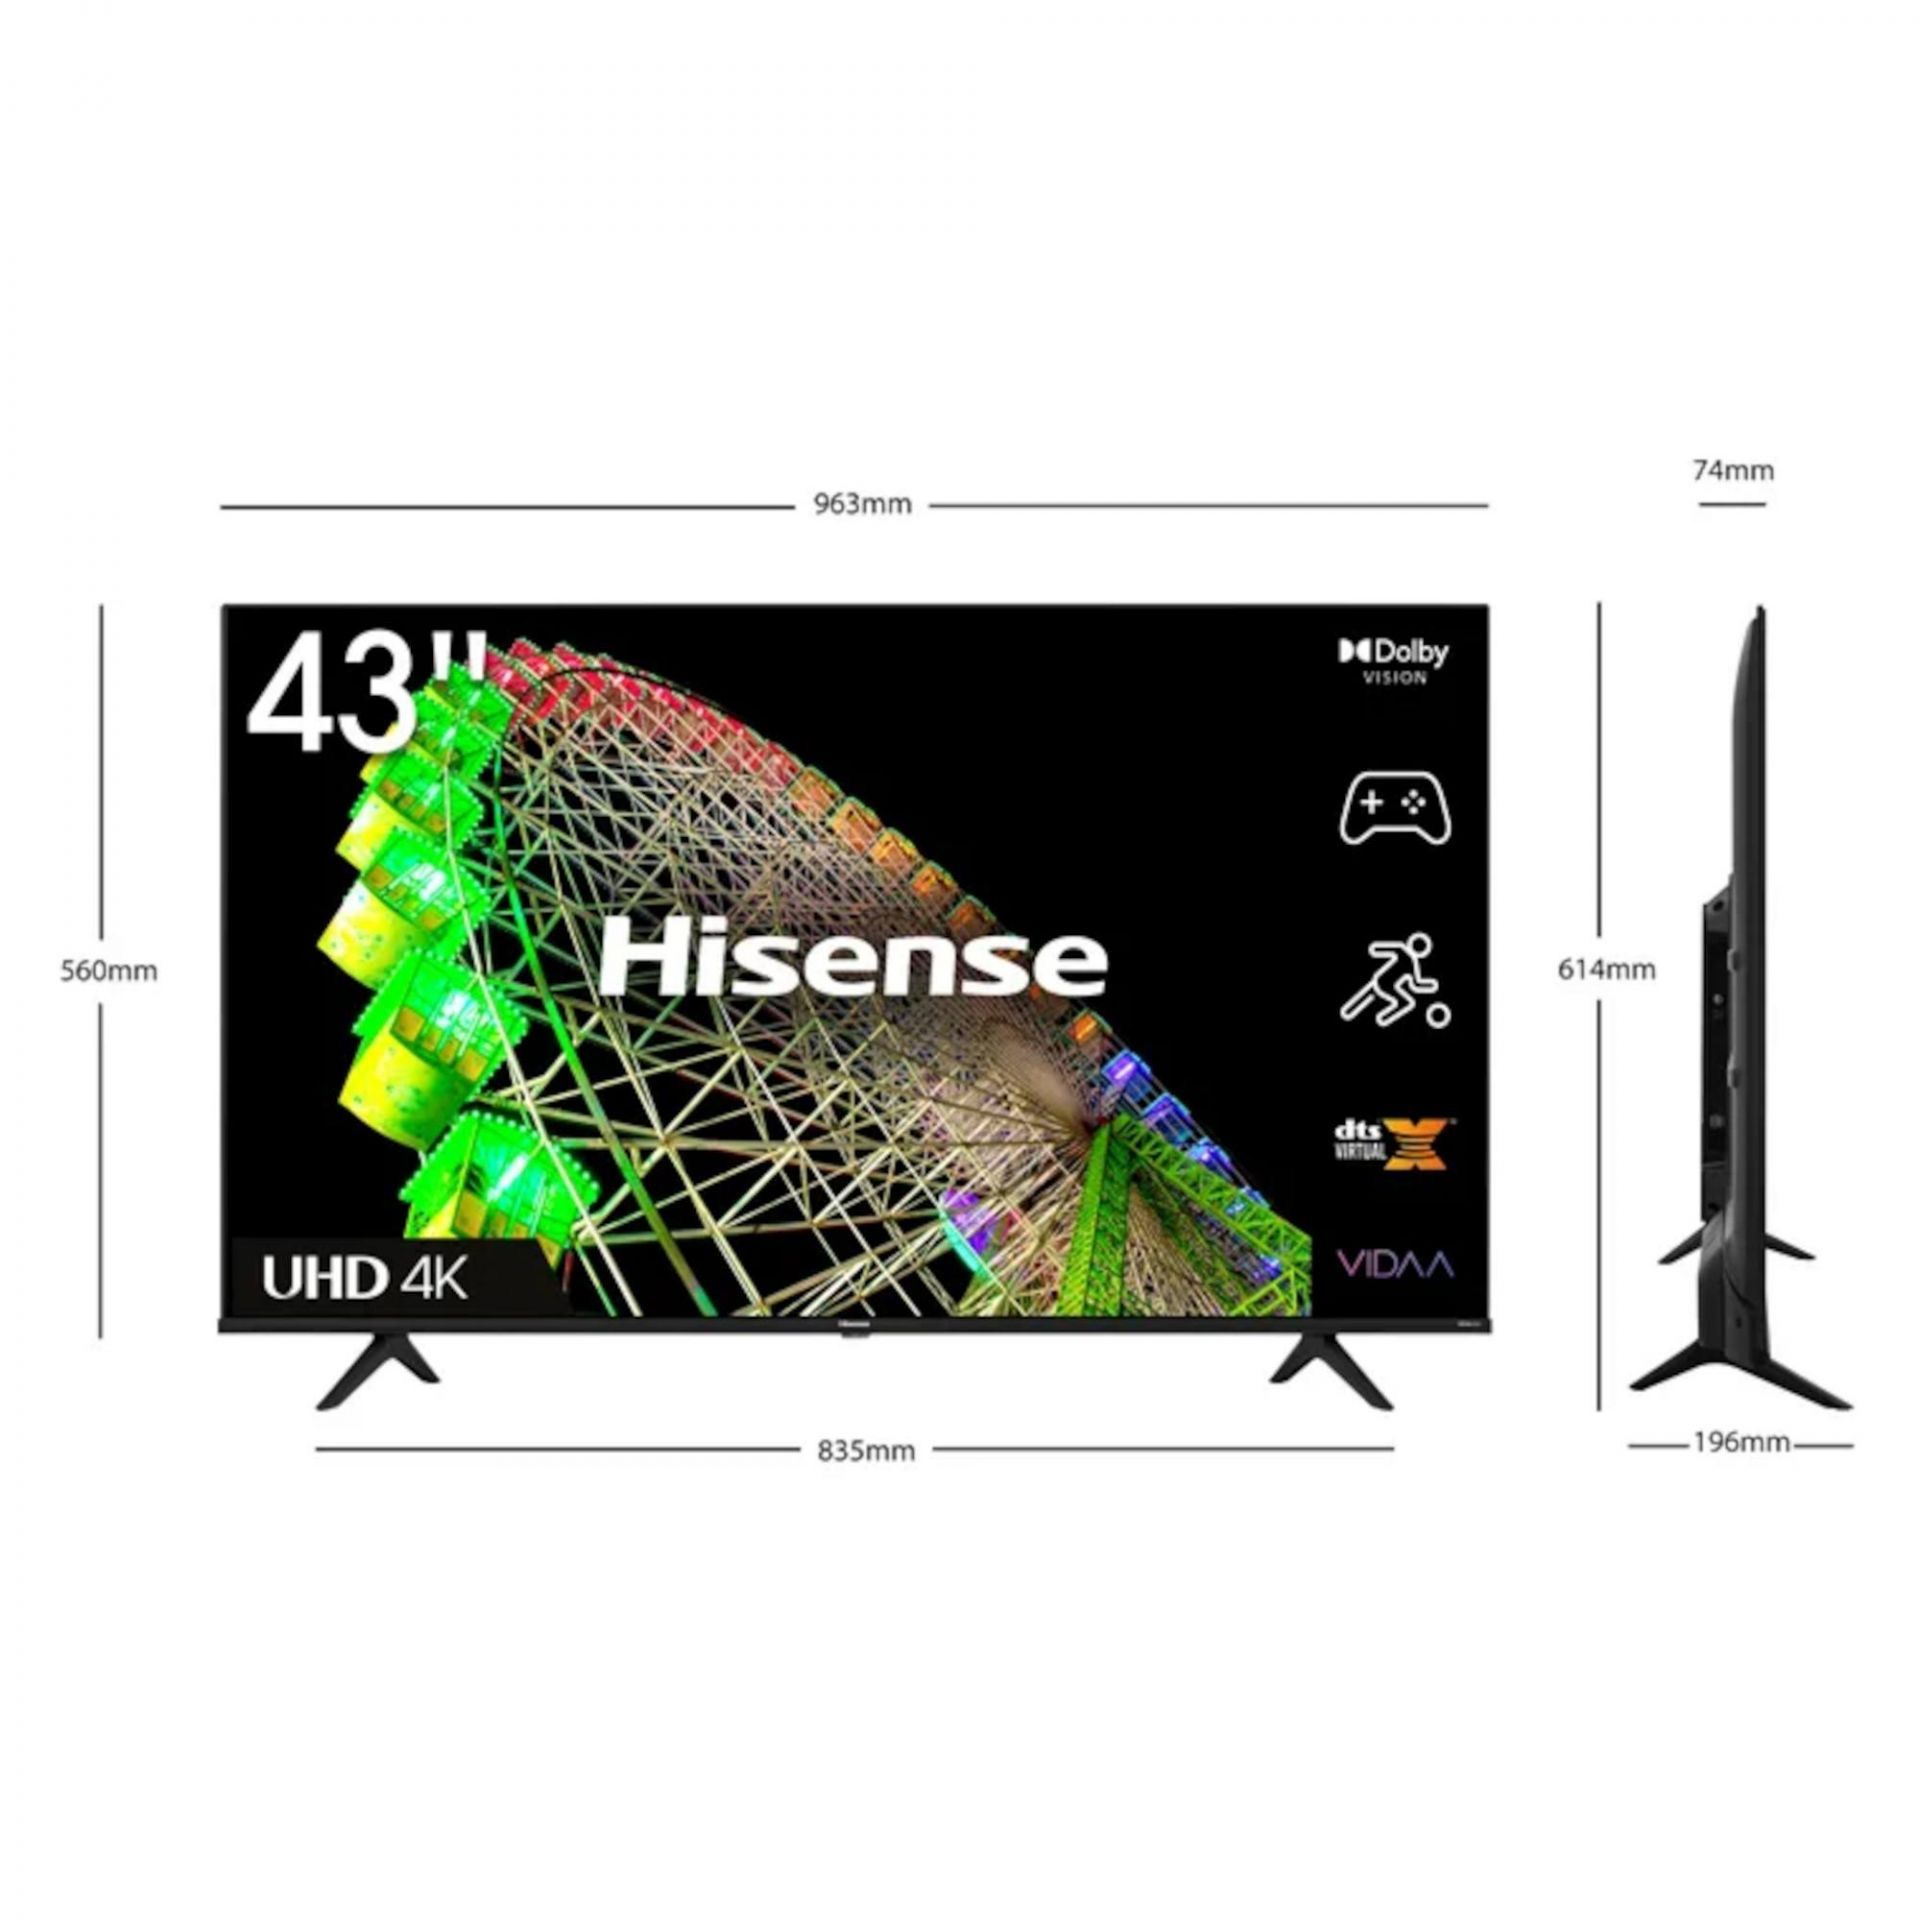 HISENSE 43A6BGTUK 43 INCH DOLBY VISION, 4K ULTRA HD HDR, SMART TV - RRP £429 - Image 4 of 4